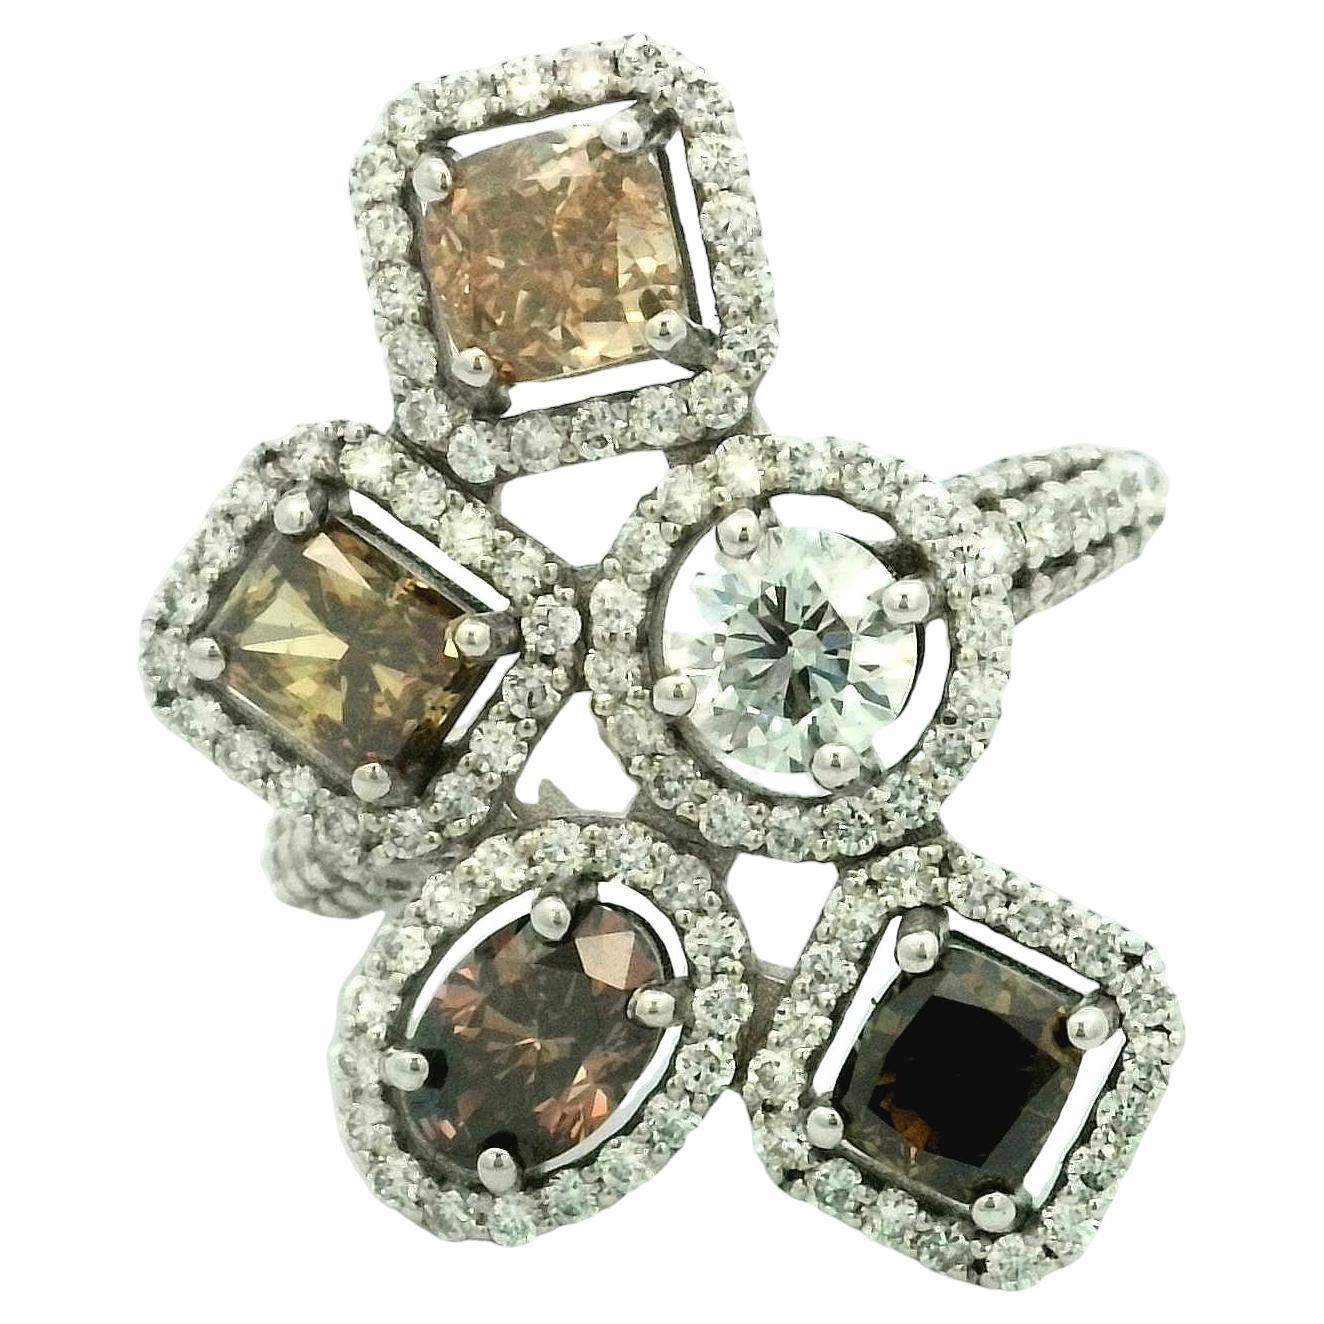 14k White Gold 3.61 carat Fancy Shape Diamond Encrusted Halo Ring (Size 7) For Sale